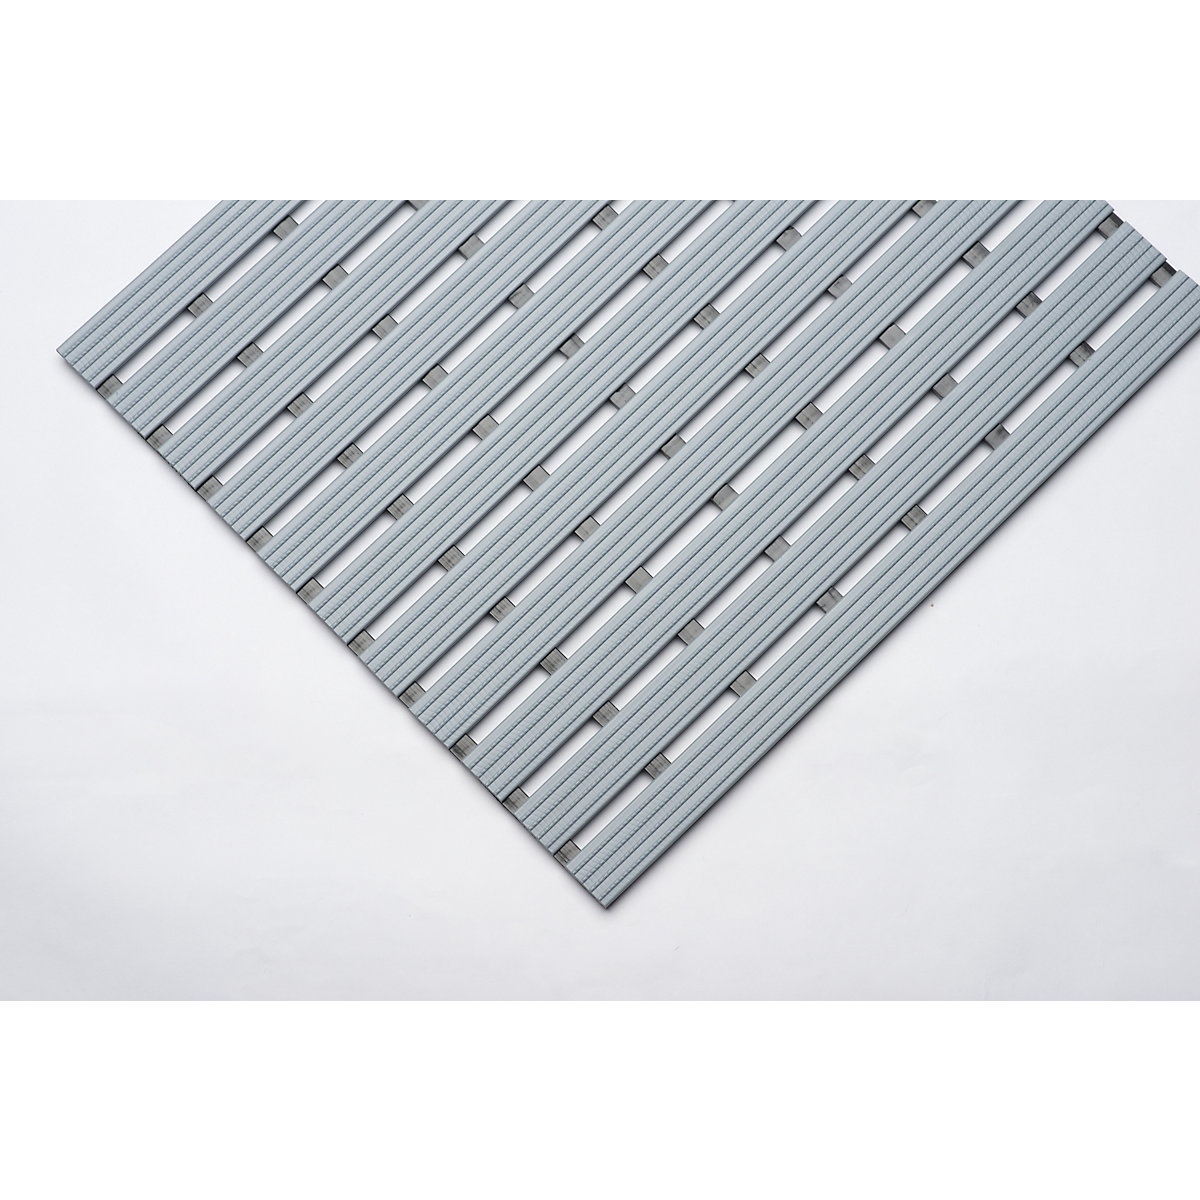 PVC-Profilmatte, pro lfd. m, Lauffläche aus Hart-PVC, rutschsicher, Breite 600 mm, grau-9